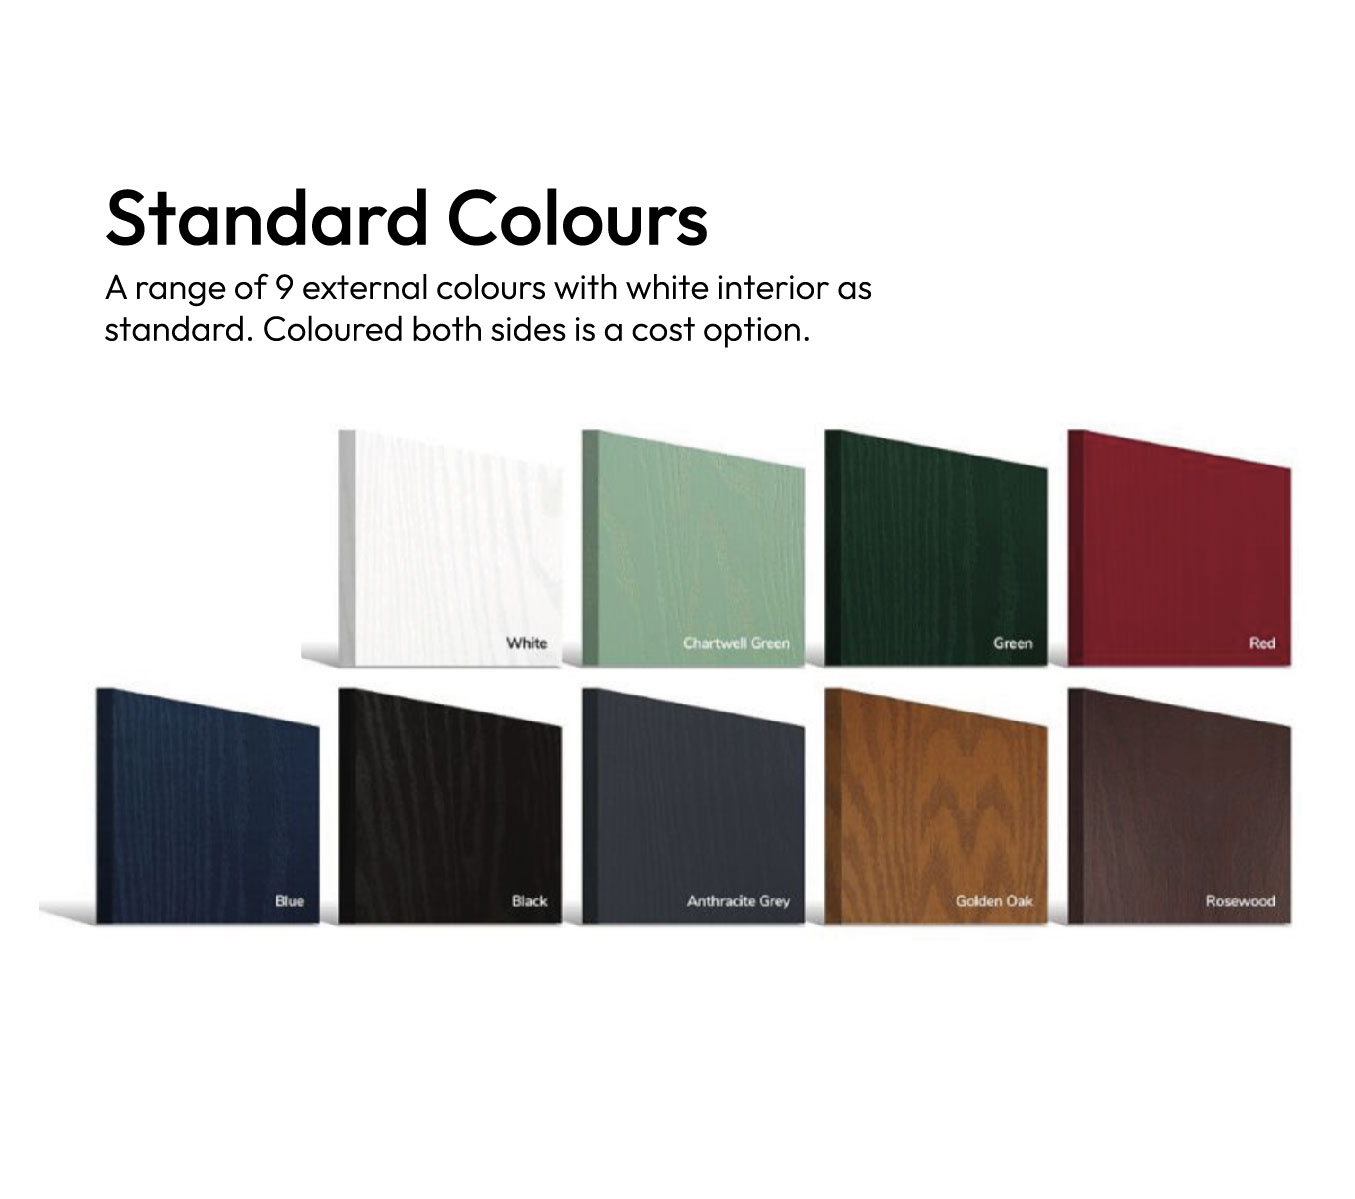 Standard Colours